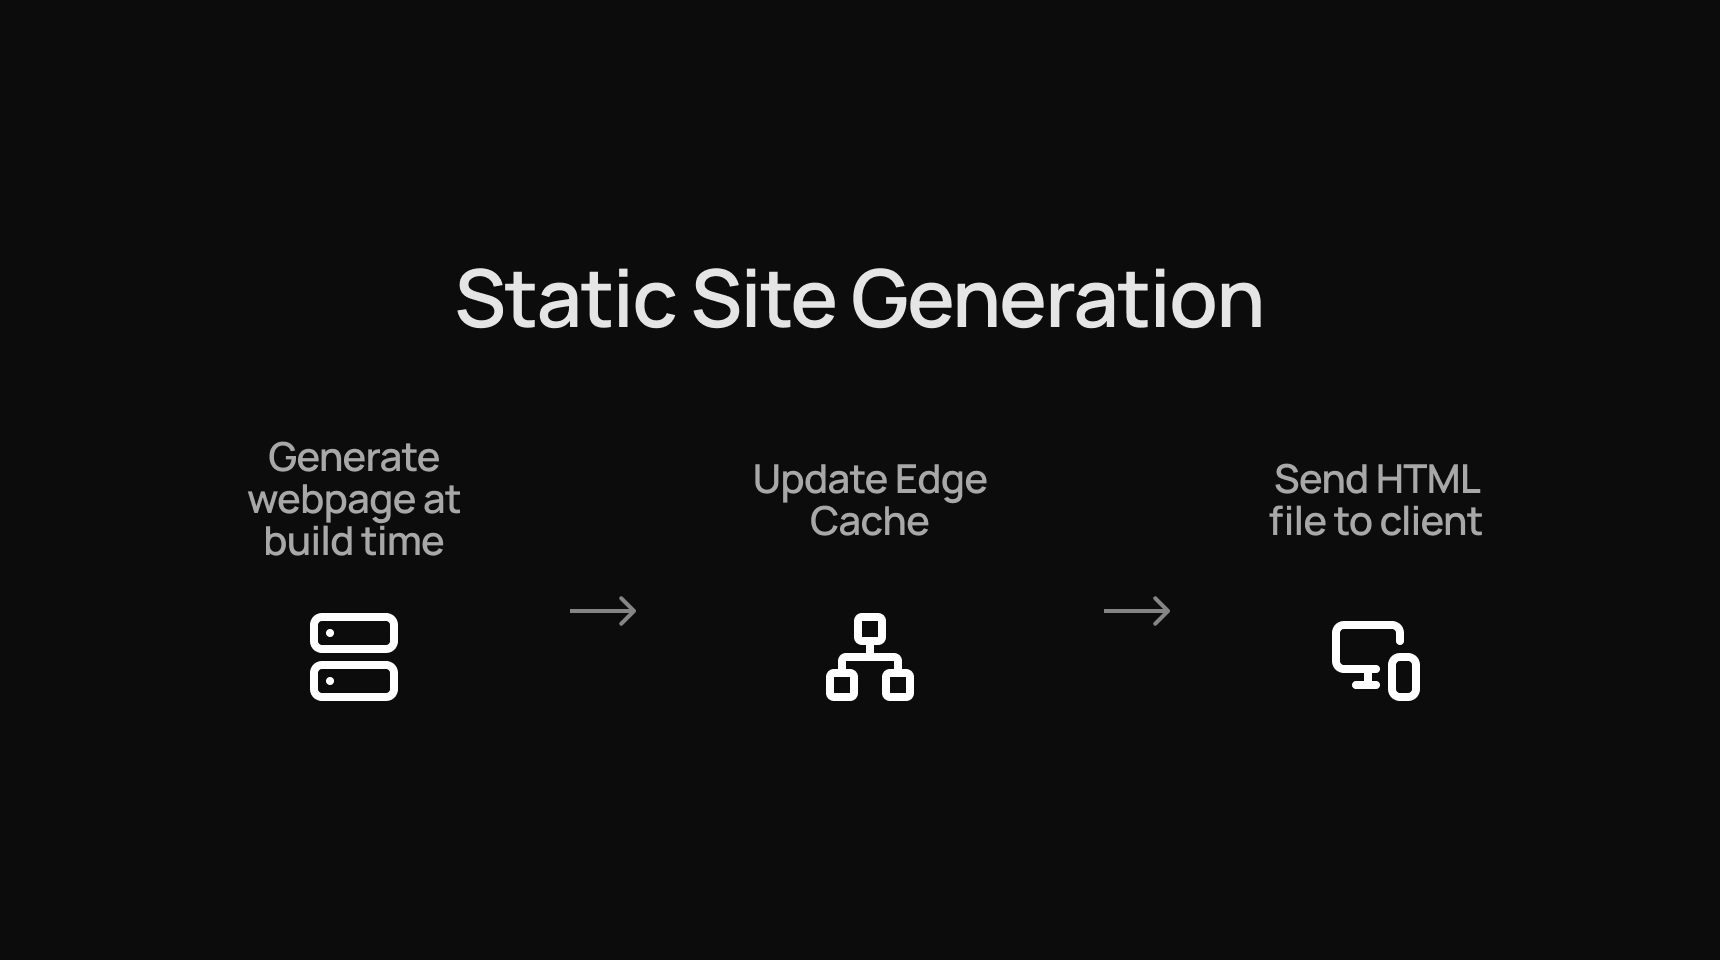 static site generation explained